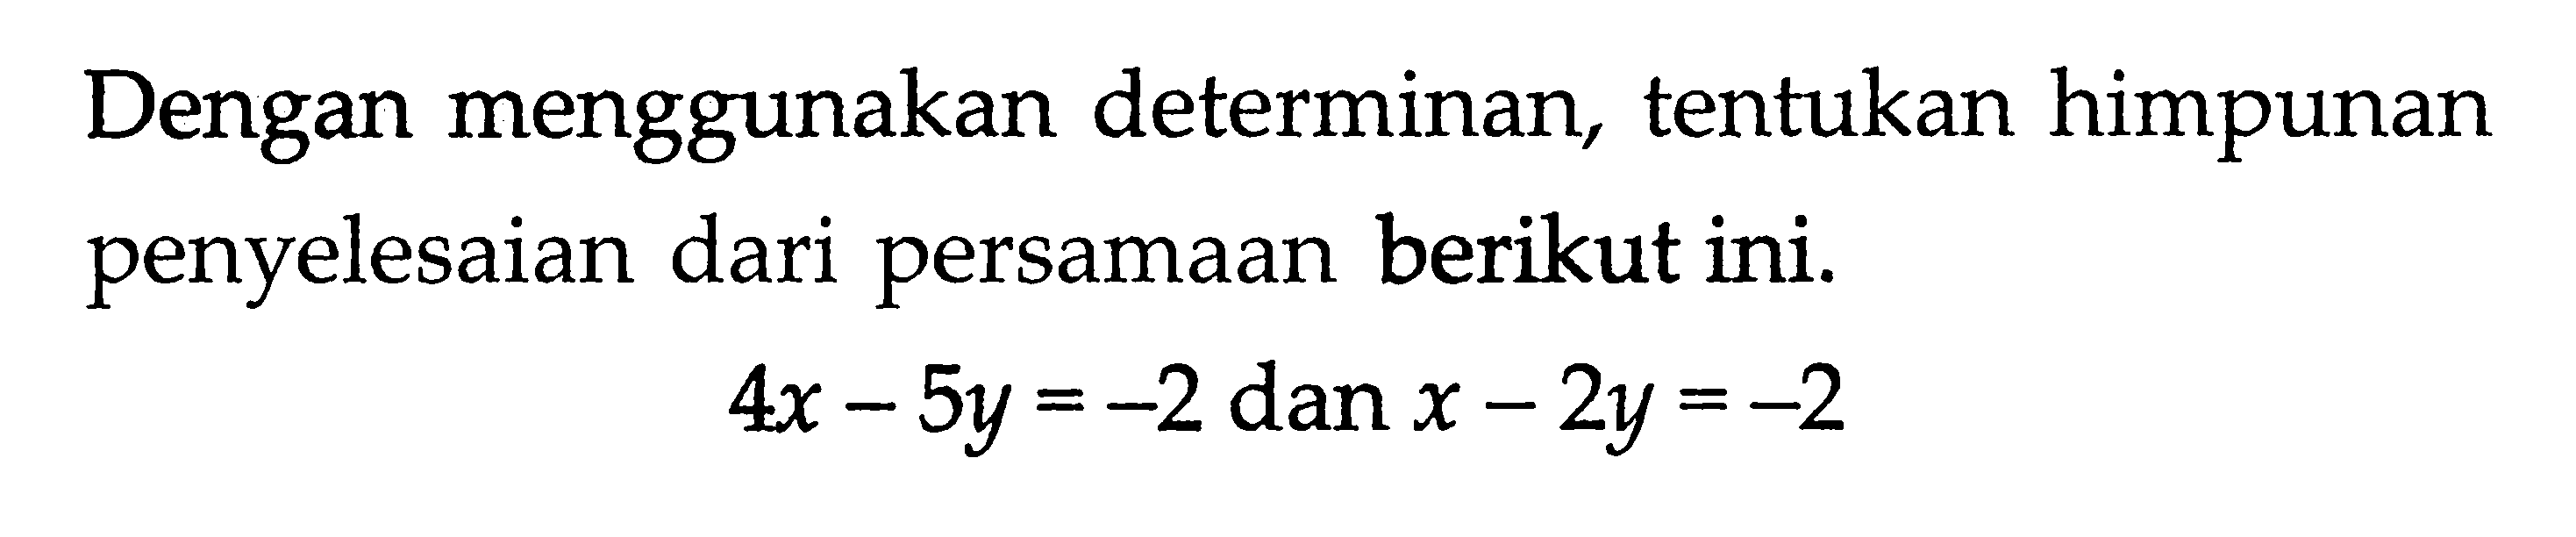 Dengan menggunakan determinan, tentukan himpunan penyelesaian dari persamaan berikut ini. 4x-5y = -2 dan x - 2y =-2